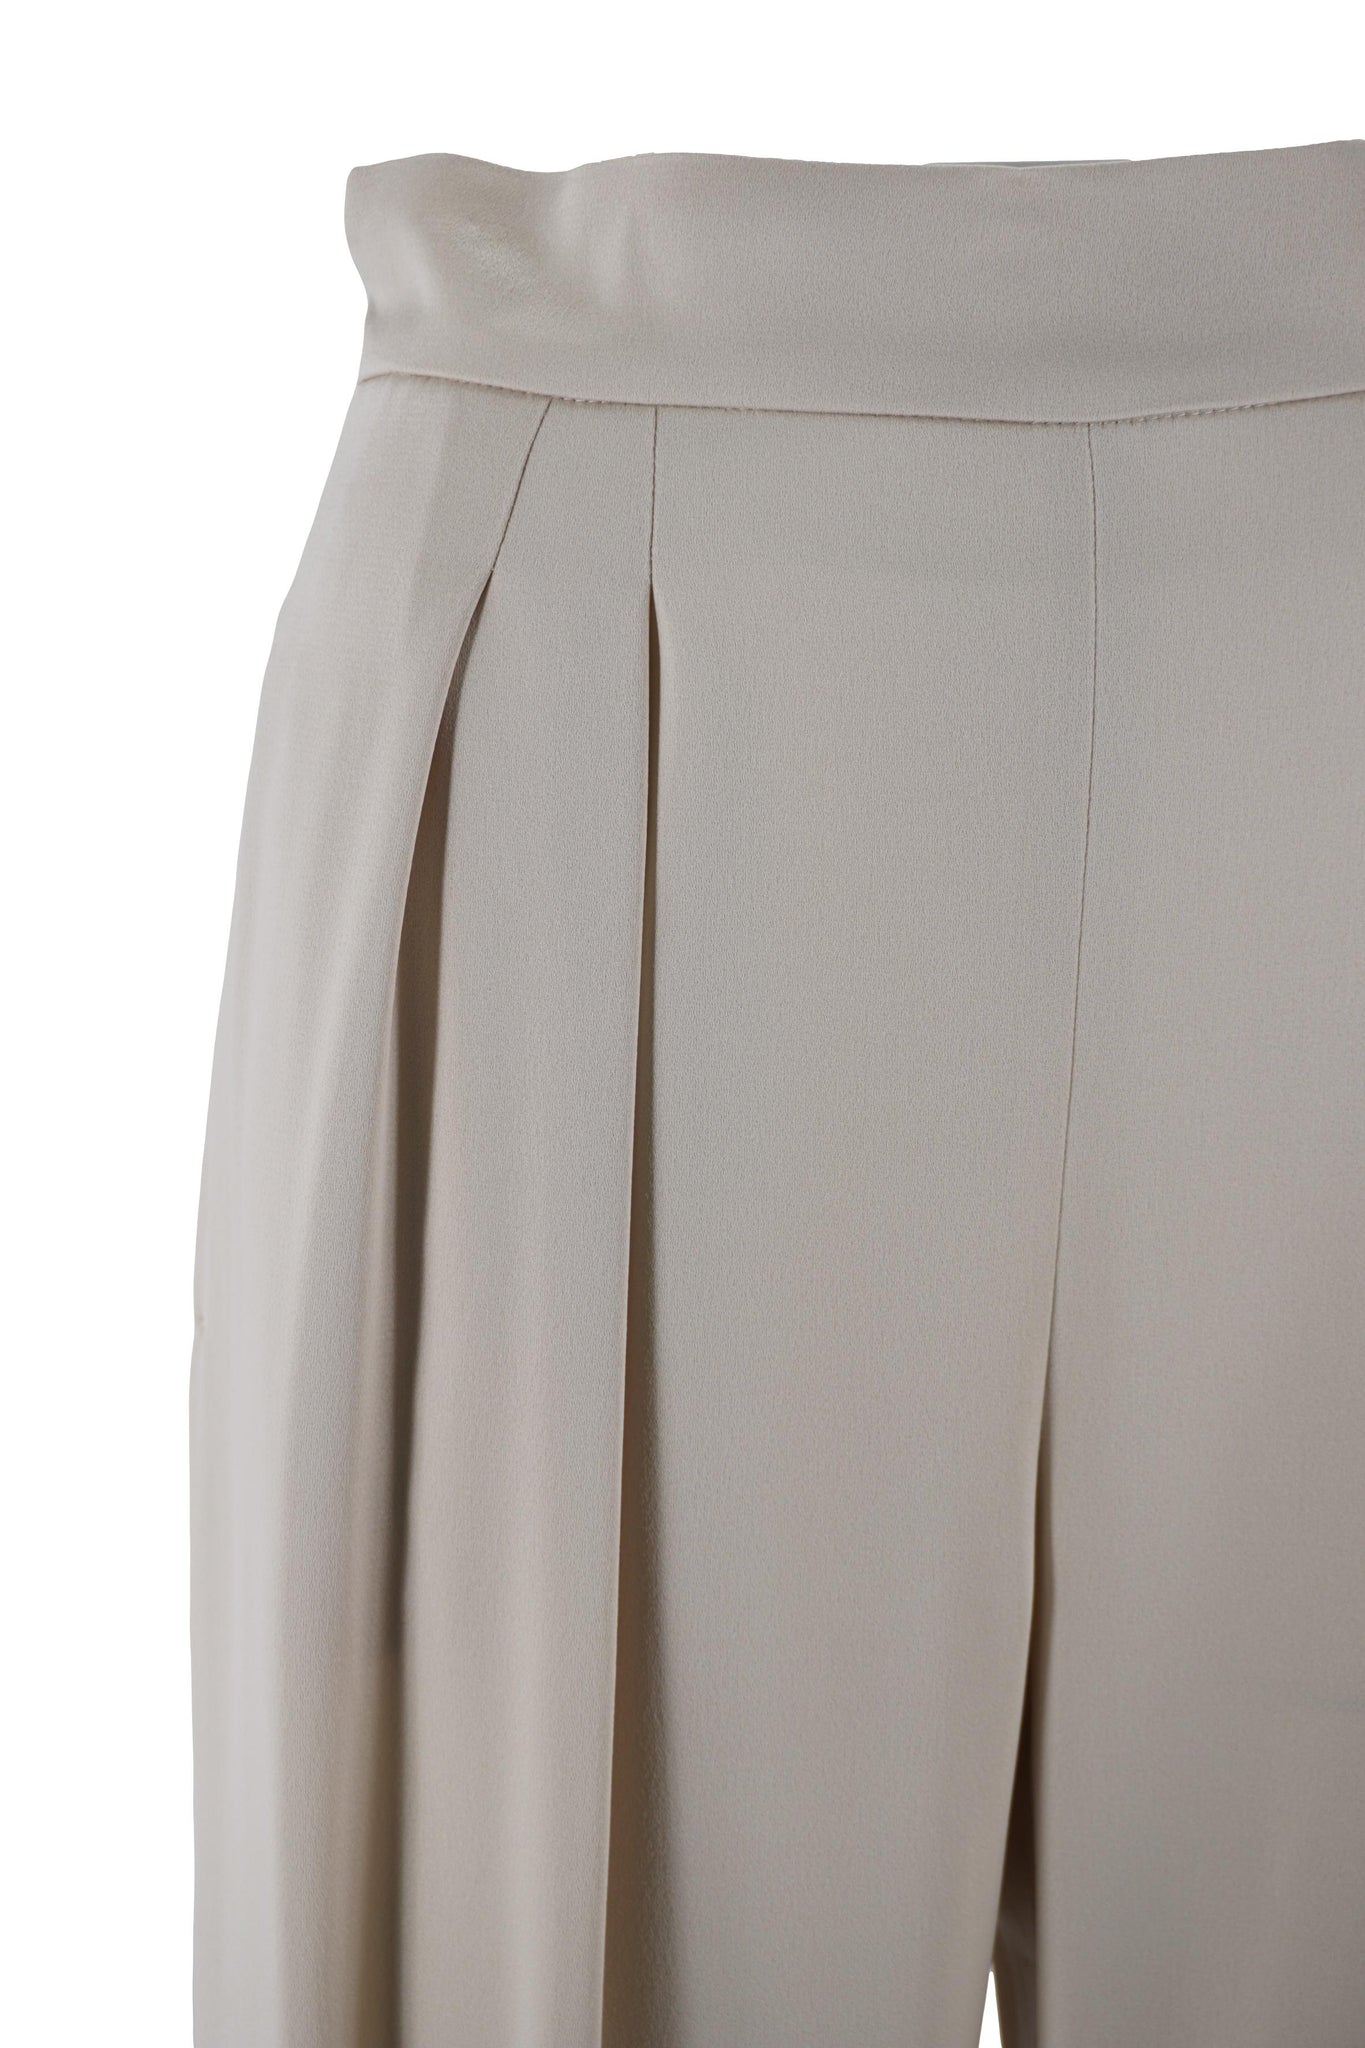 Pantalone Fluido in Satin / Beige - Ideal Moda